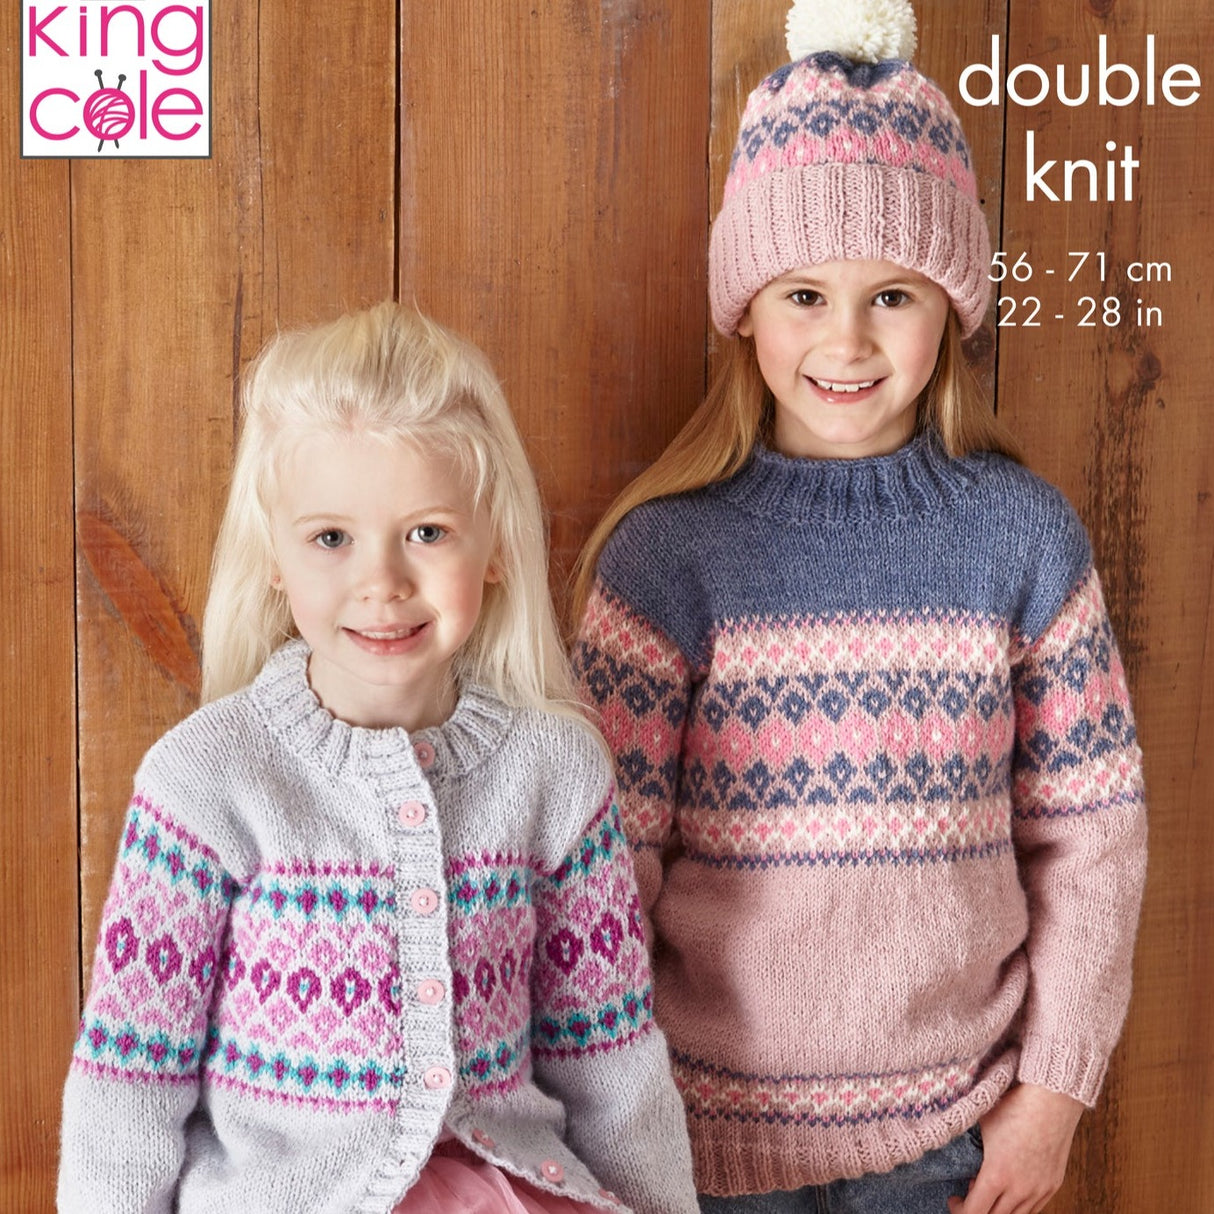 King Cole Kids DK Knitting Pattern 5869